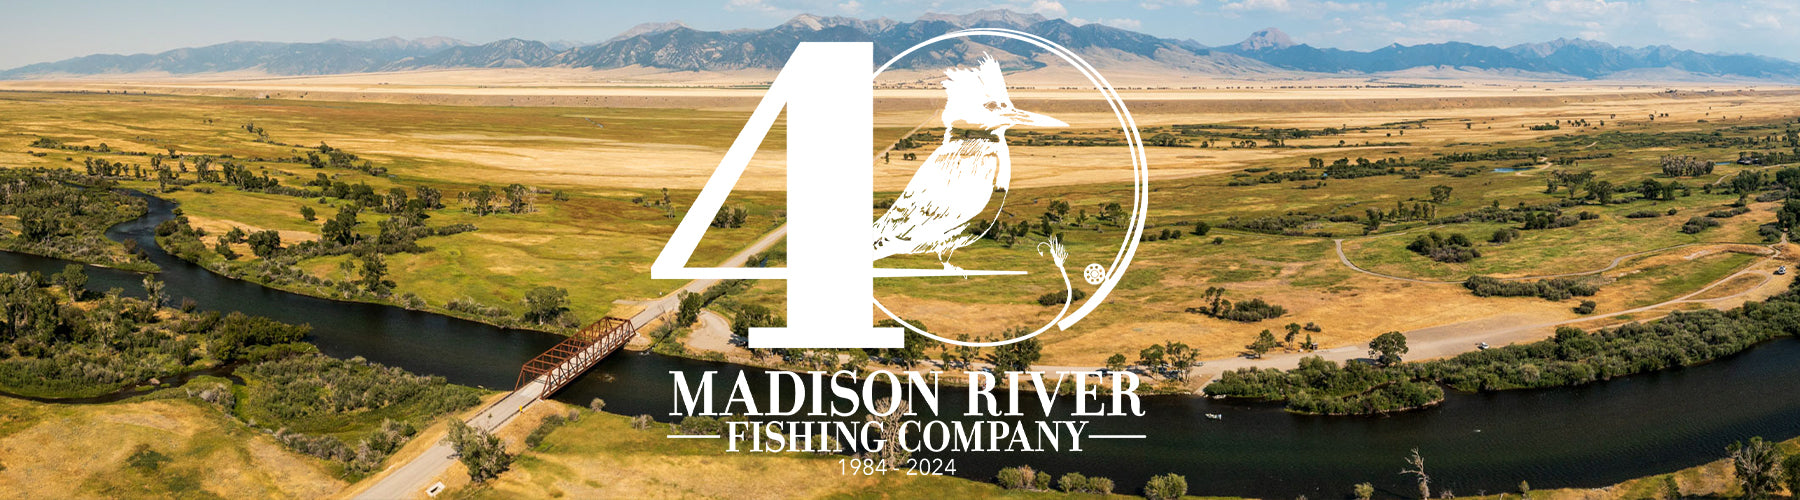 Madison-River-Fishing-Company-40th-Anniversary-Sale